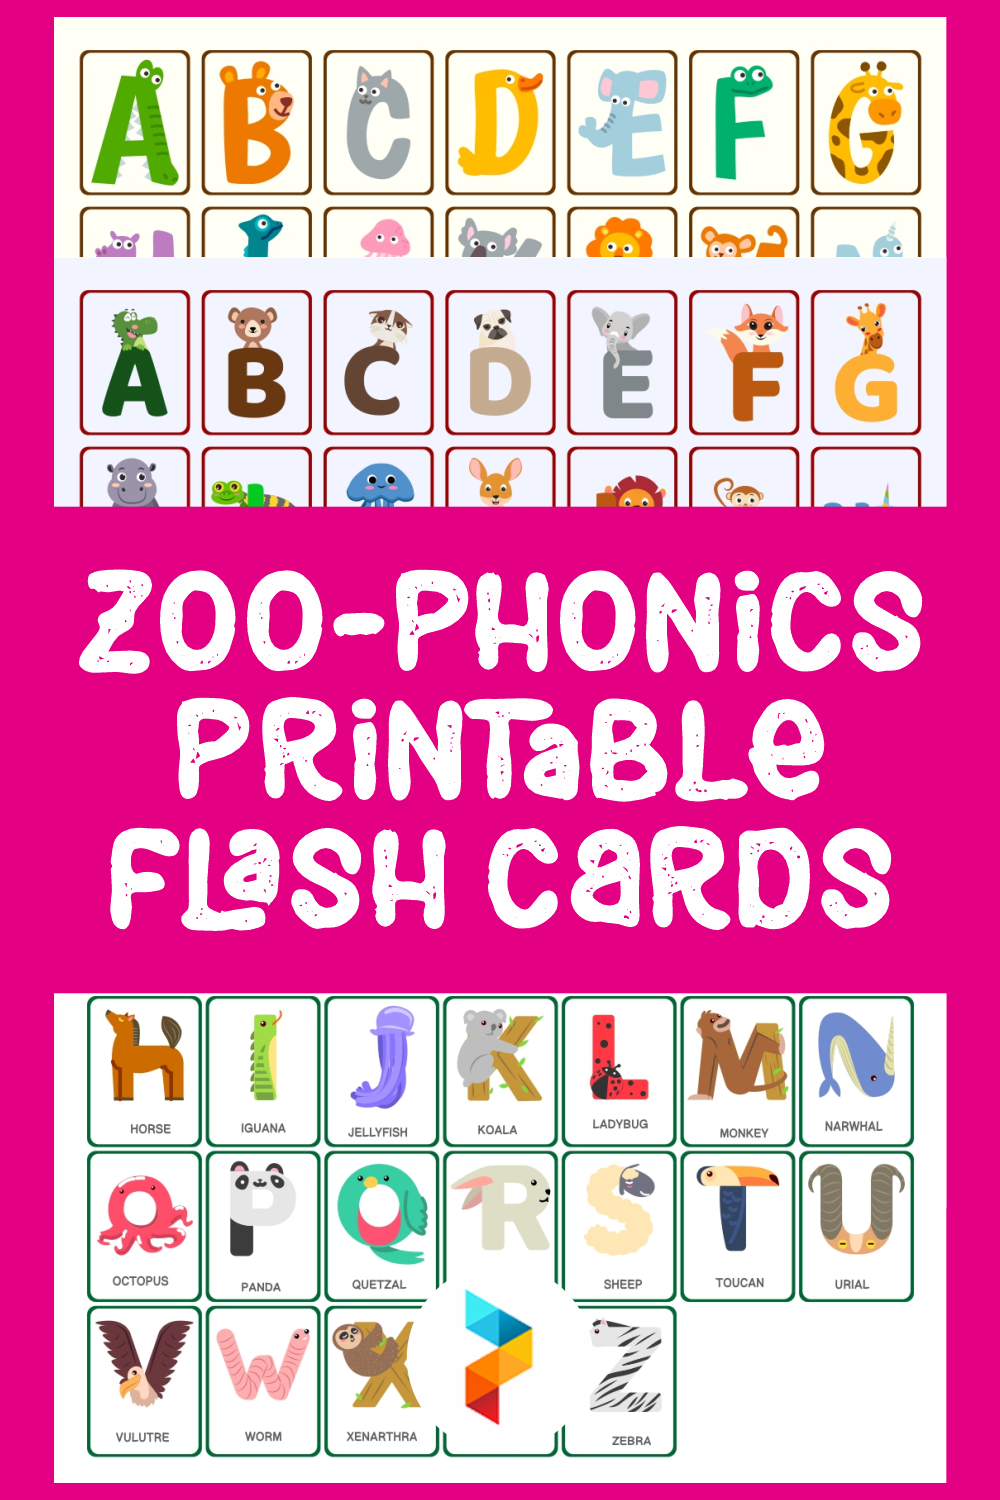 7 Best Zoo Phonics Printable Flash Cards Printableecom Zoophonics 